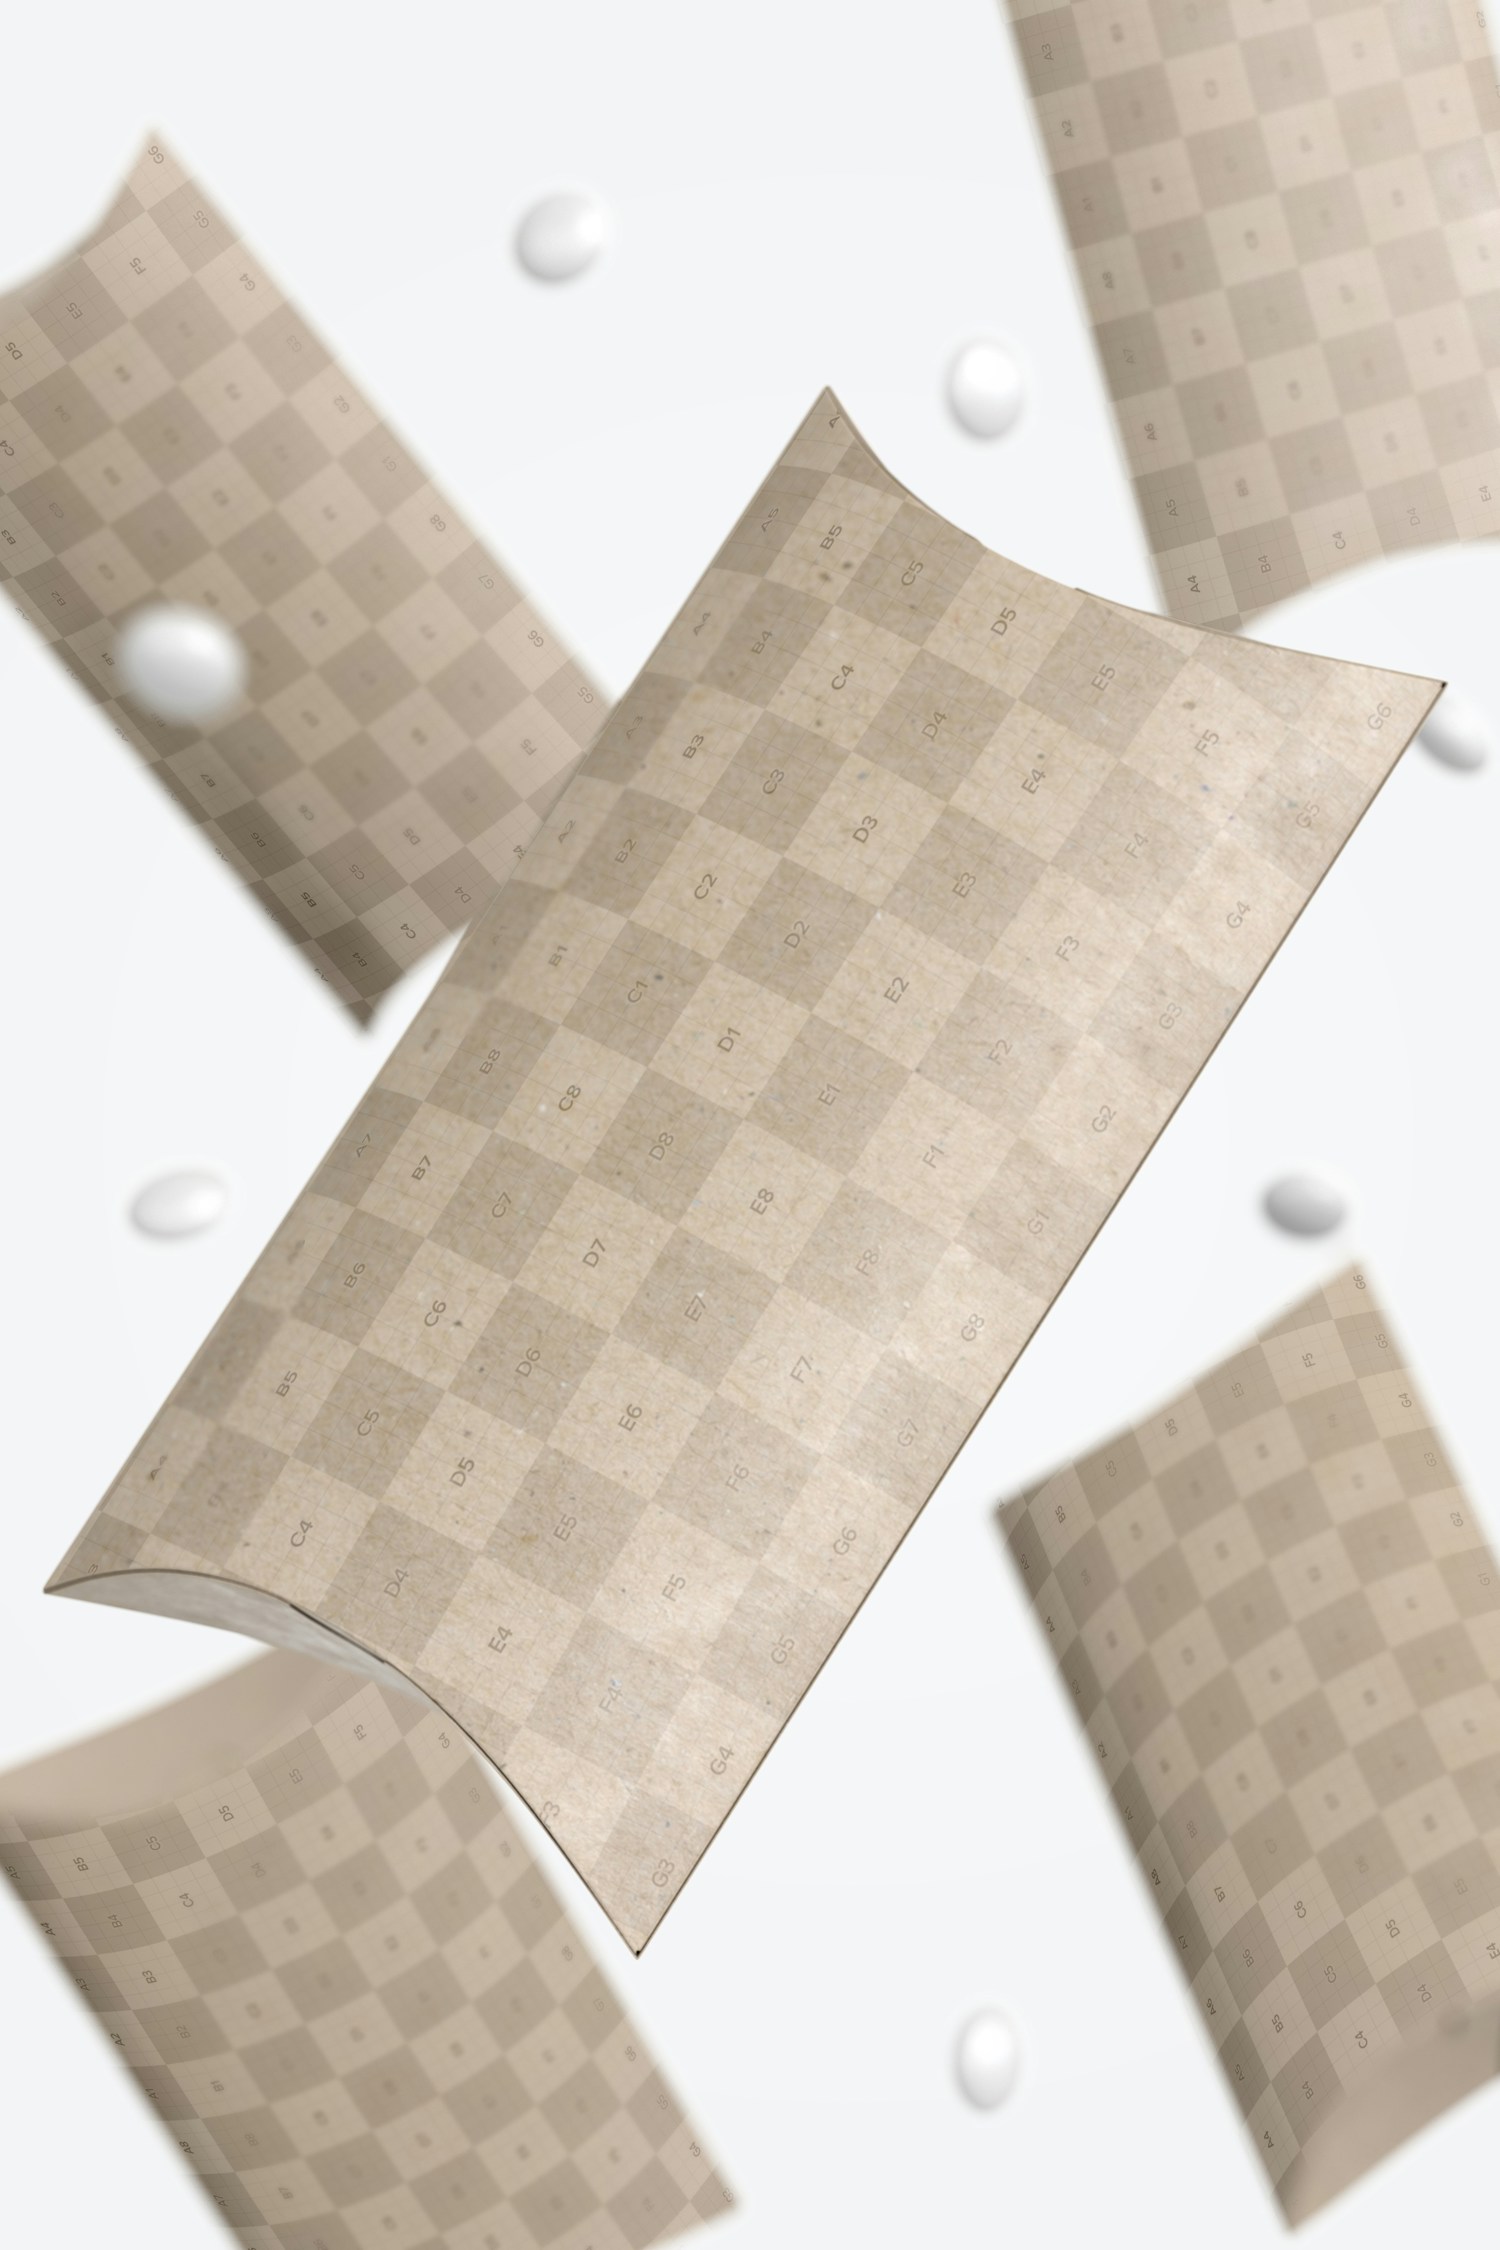 Large Pillow Boxes Set PSD Mockup, Falling – Original Mockups